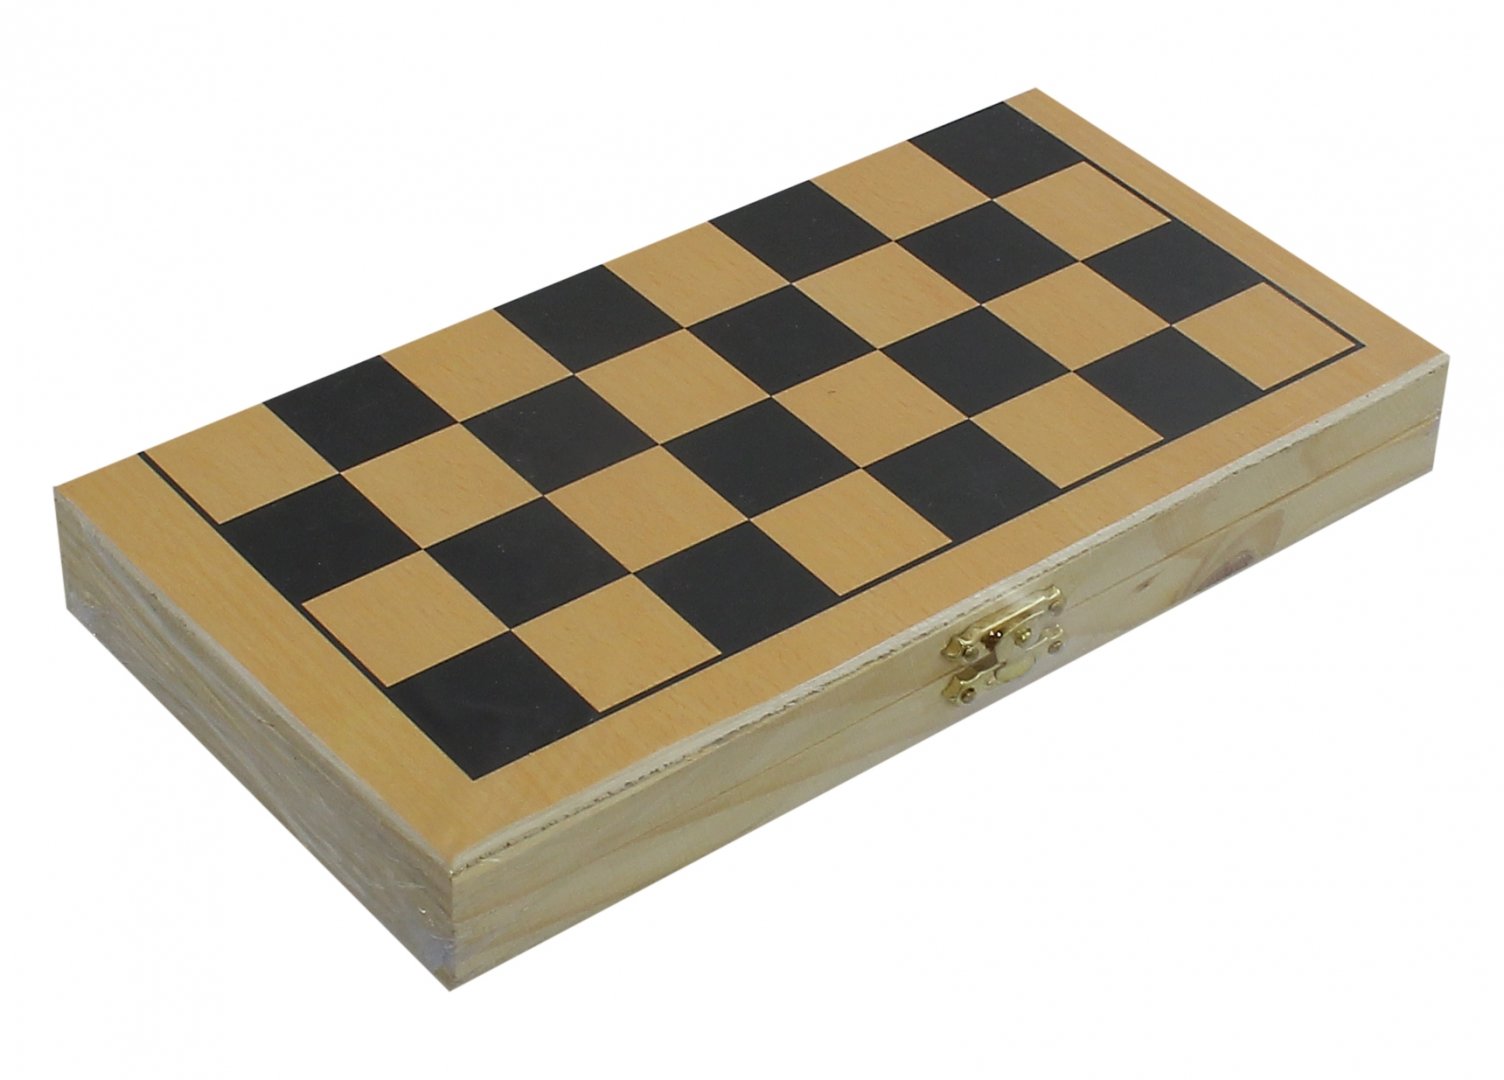 Иллюстрация 1 из 4 для Шахматы (22х11.5х3.5 см) (Т58500) | Лабиринт - игрушки. Источник: Лабиринт